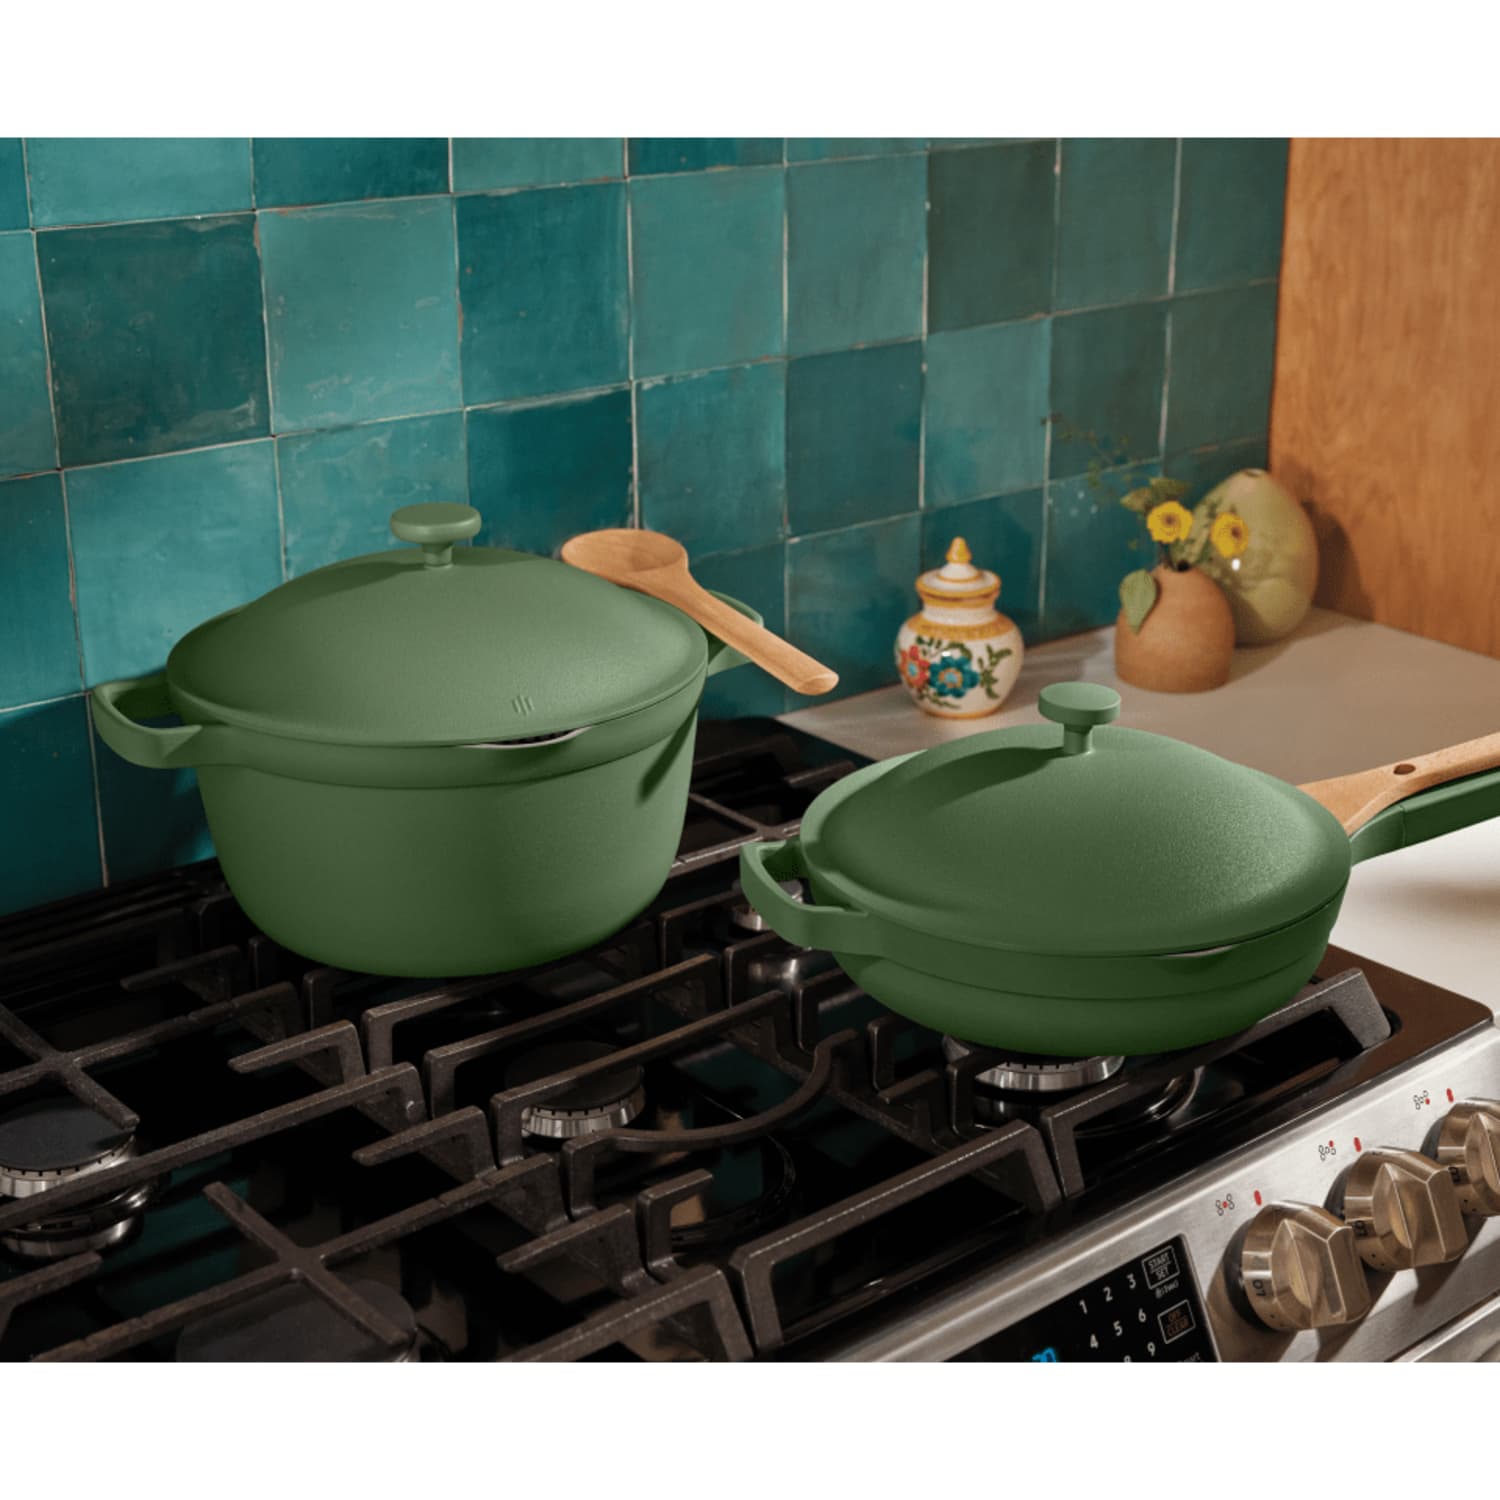 Italian Terra Cotta Cookware - Green Kitchen Companion - HubPages